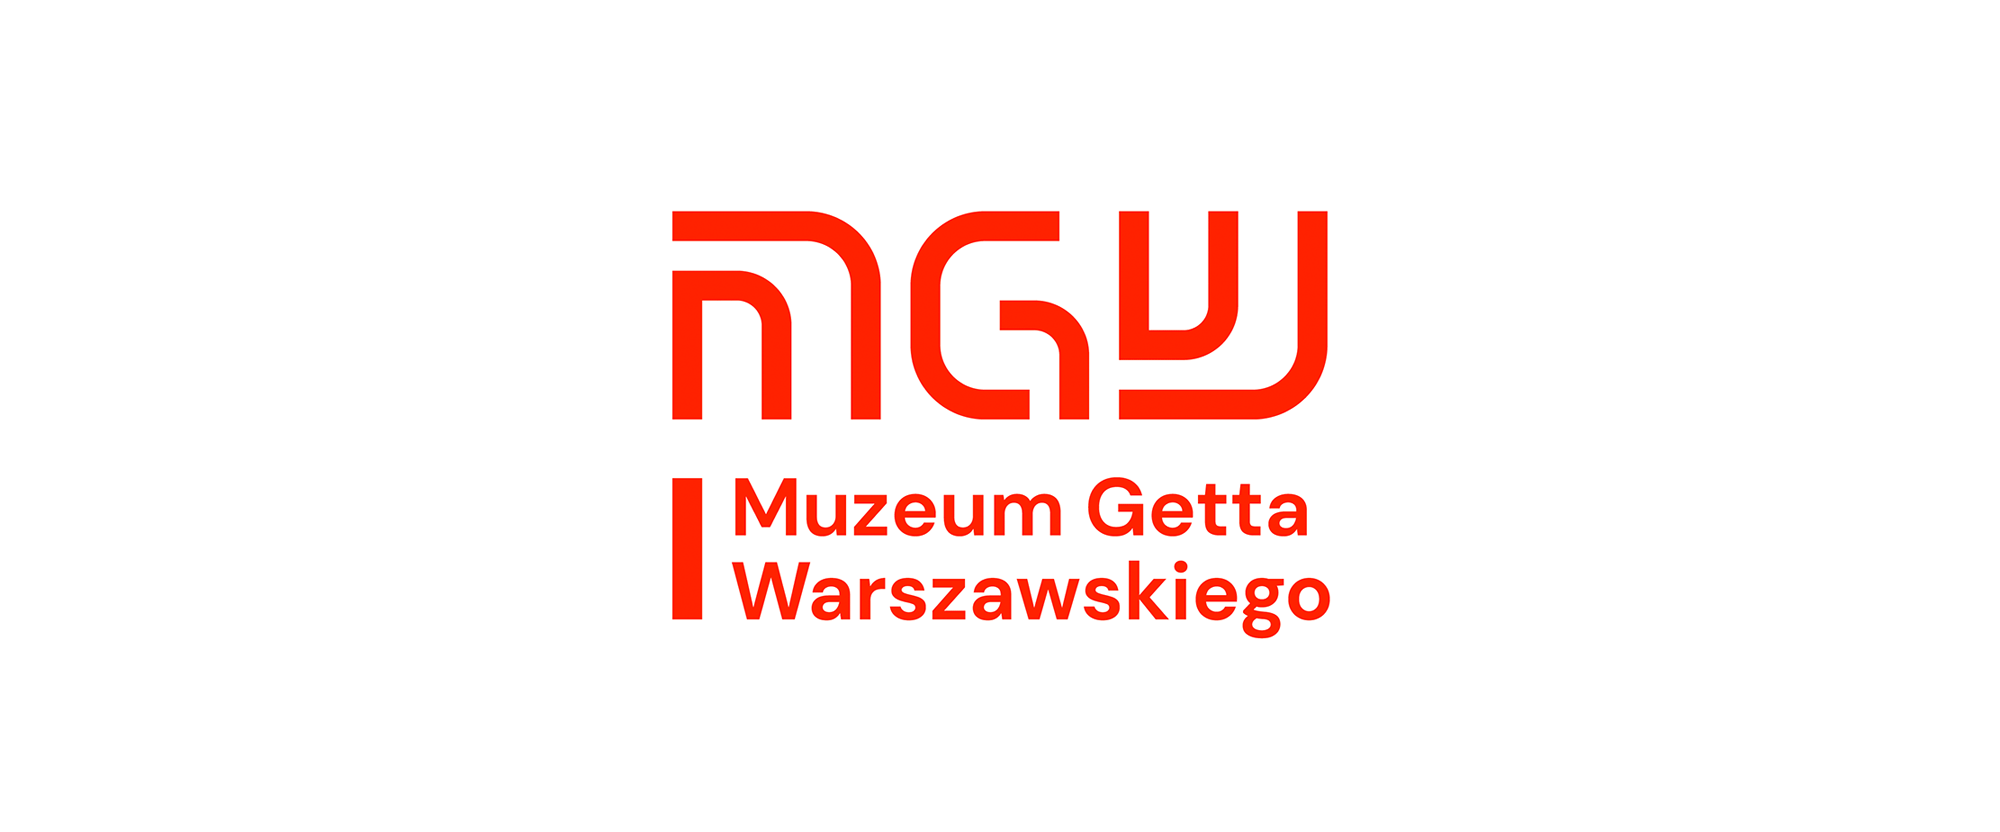 New Logo and Identity for Warsaw Ghetto Museum by DADADA studio